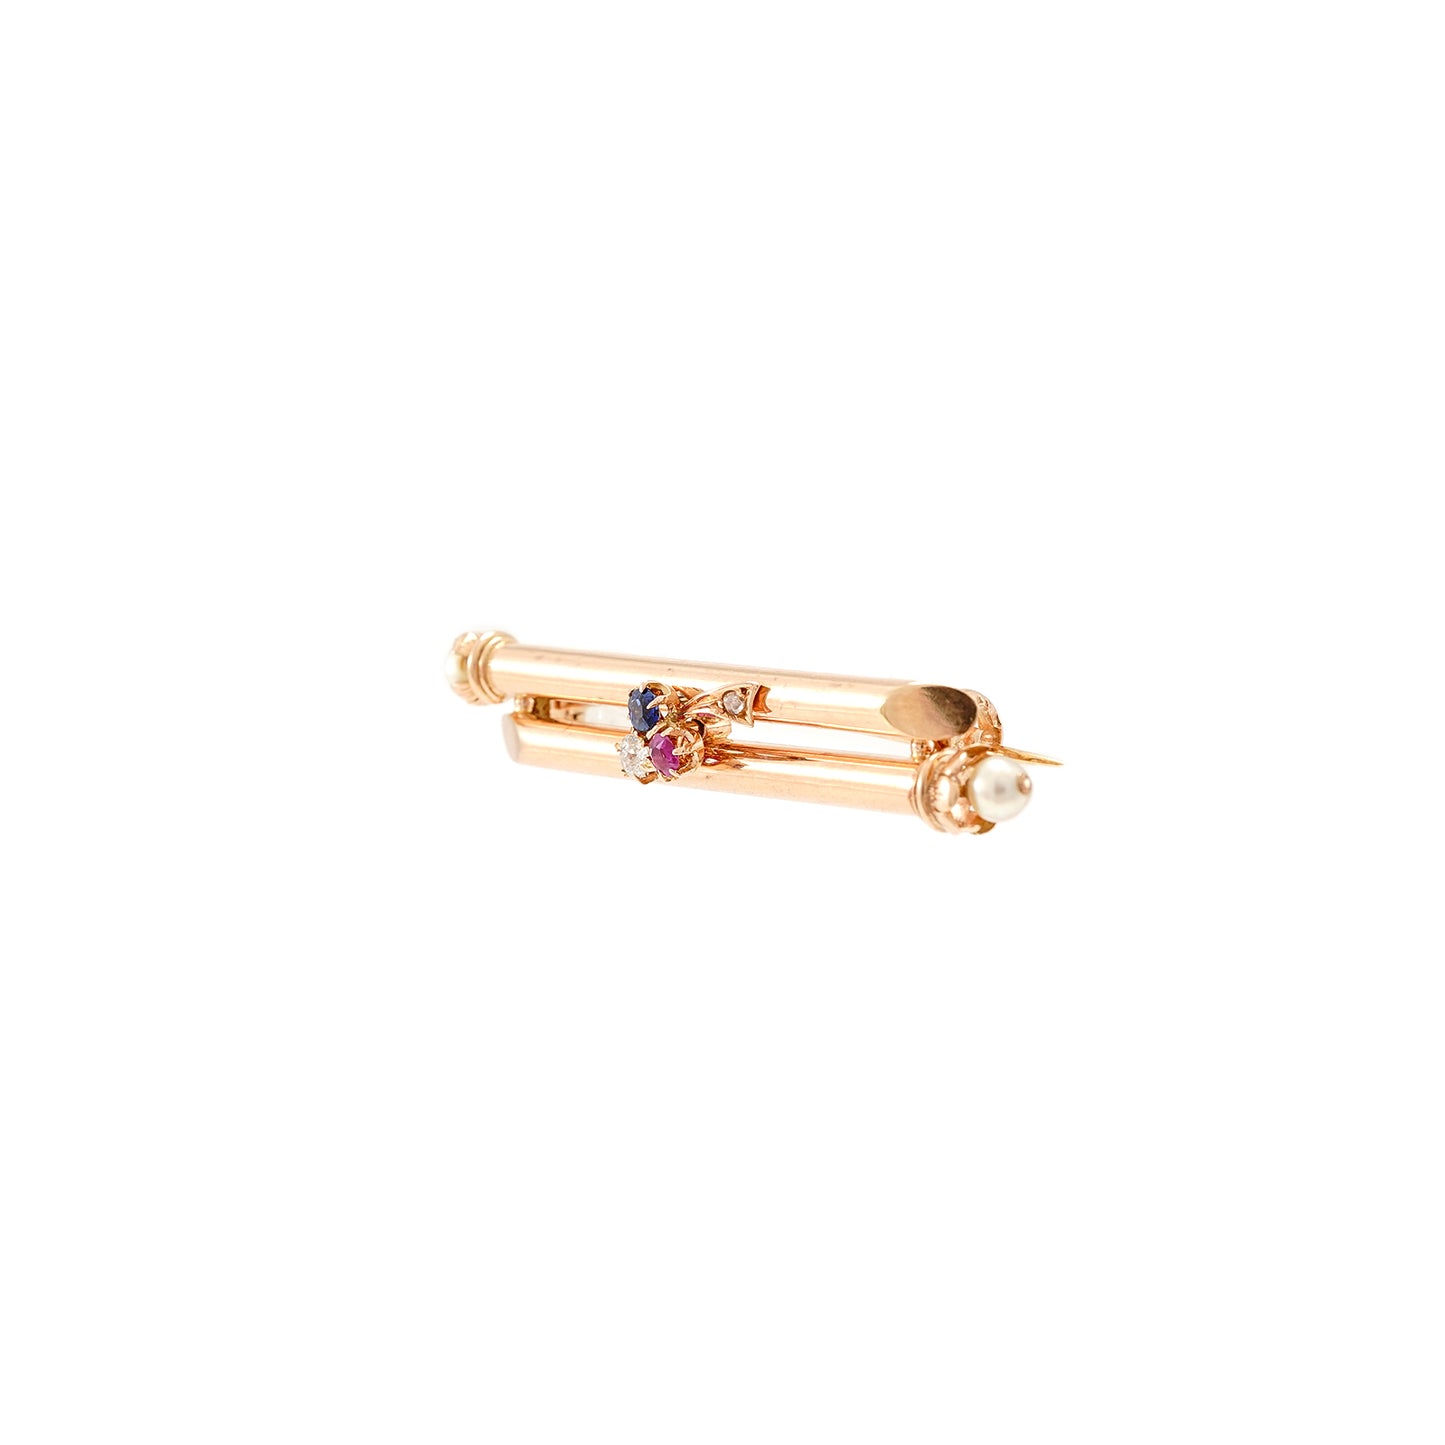 Art Deco diamond brooch spinel pearl rose gold 585 14K set women's jewelry pin